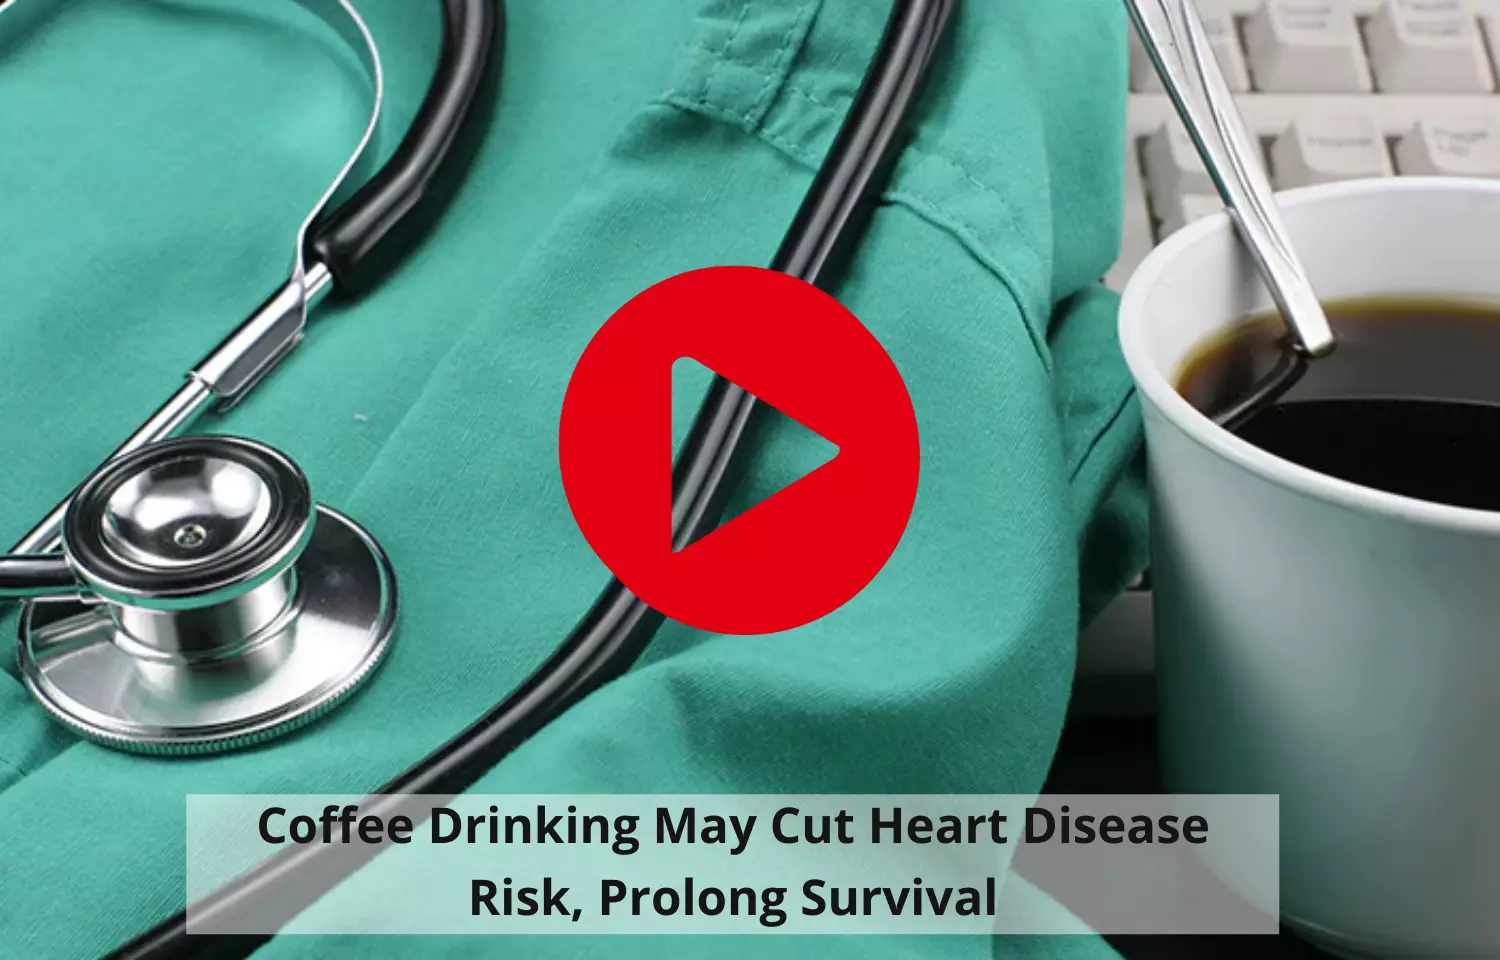 Coffee drinking may cut heart disease risk, prolong survival